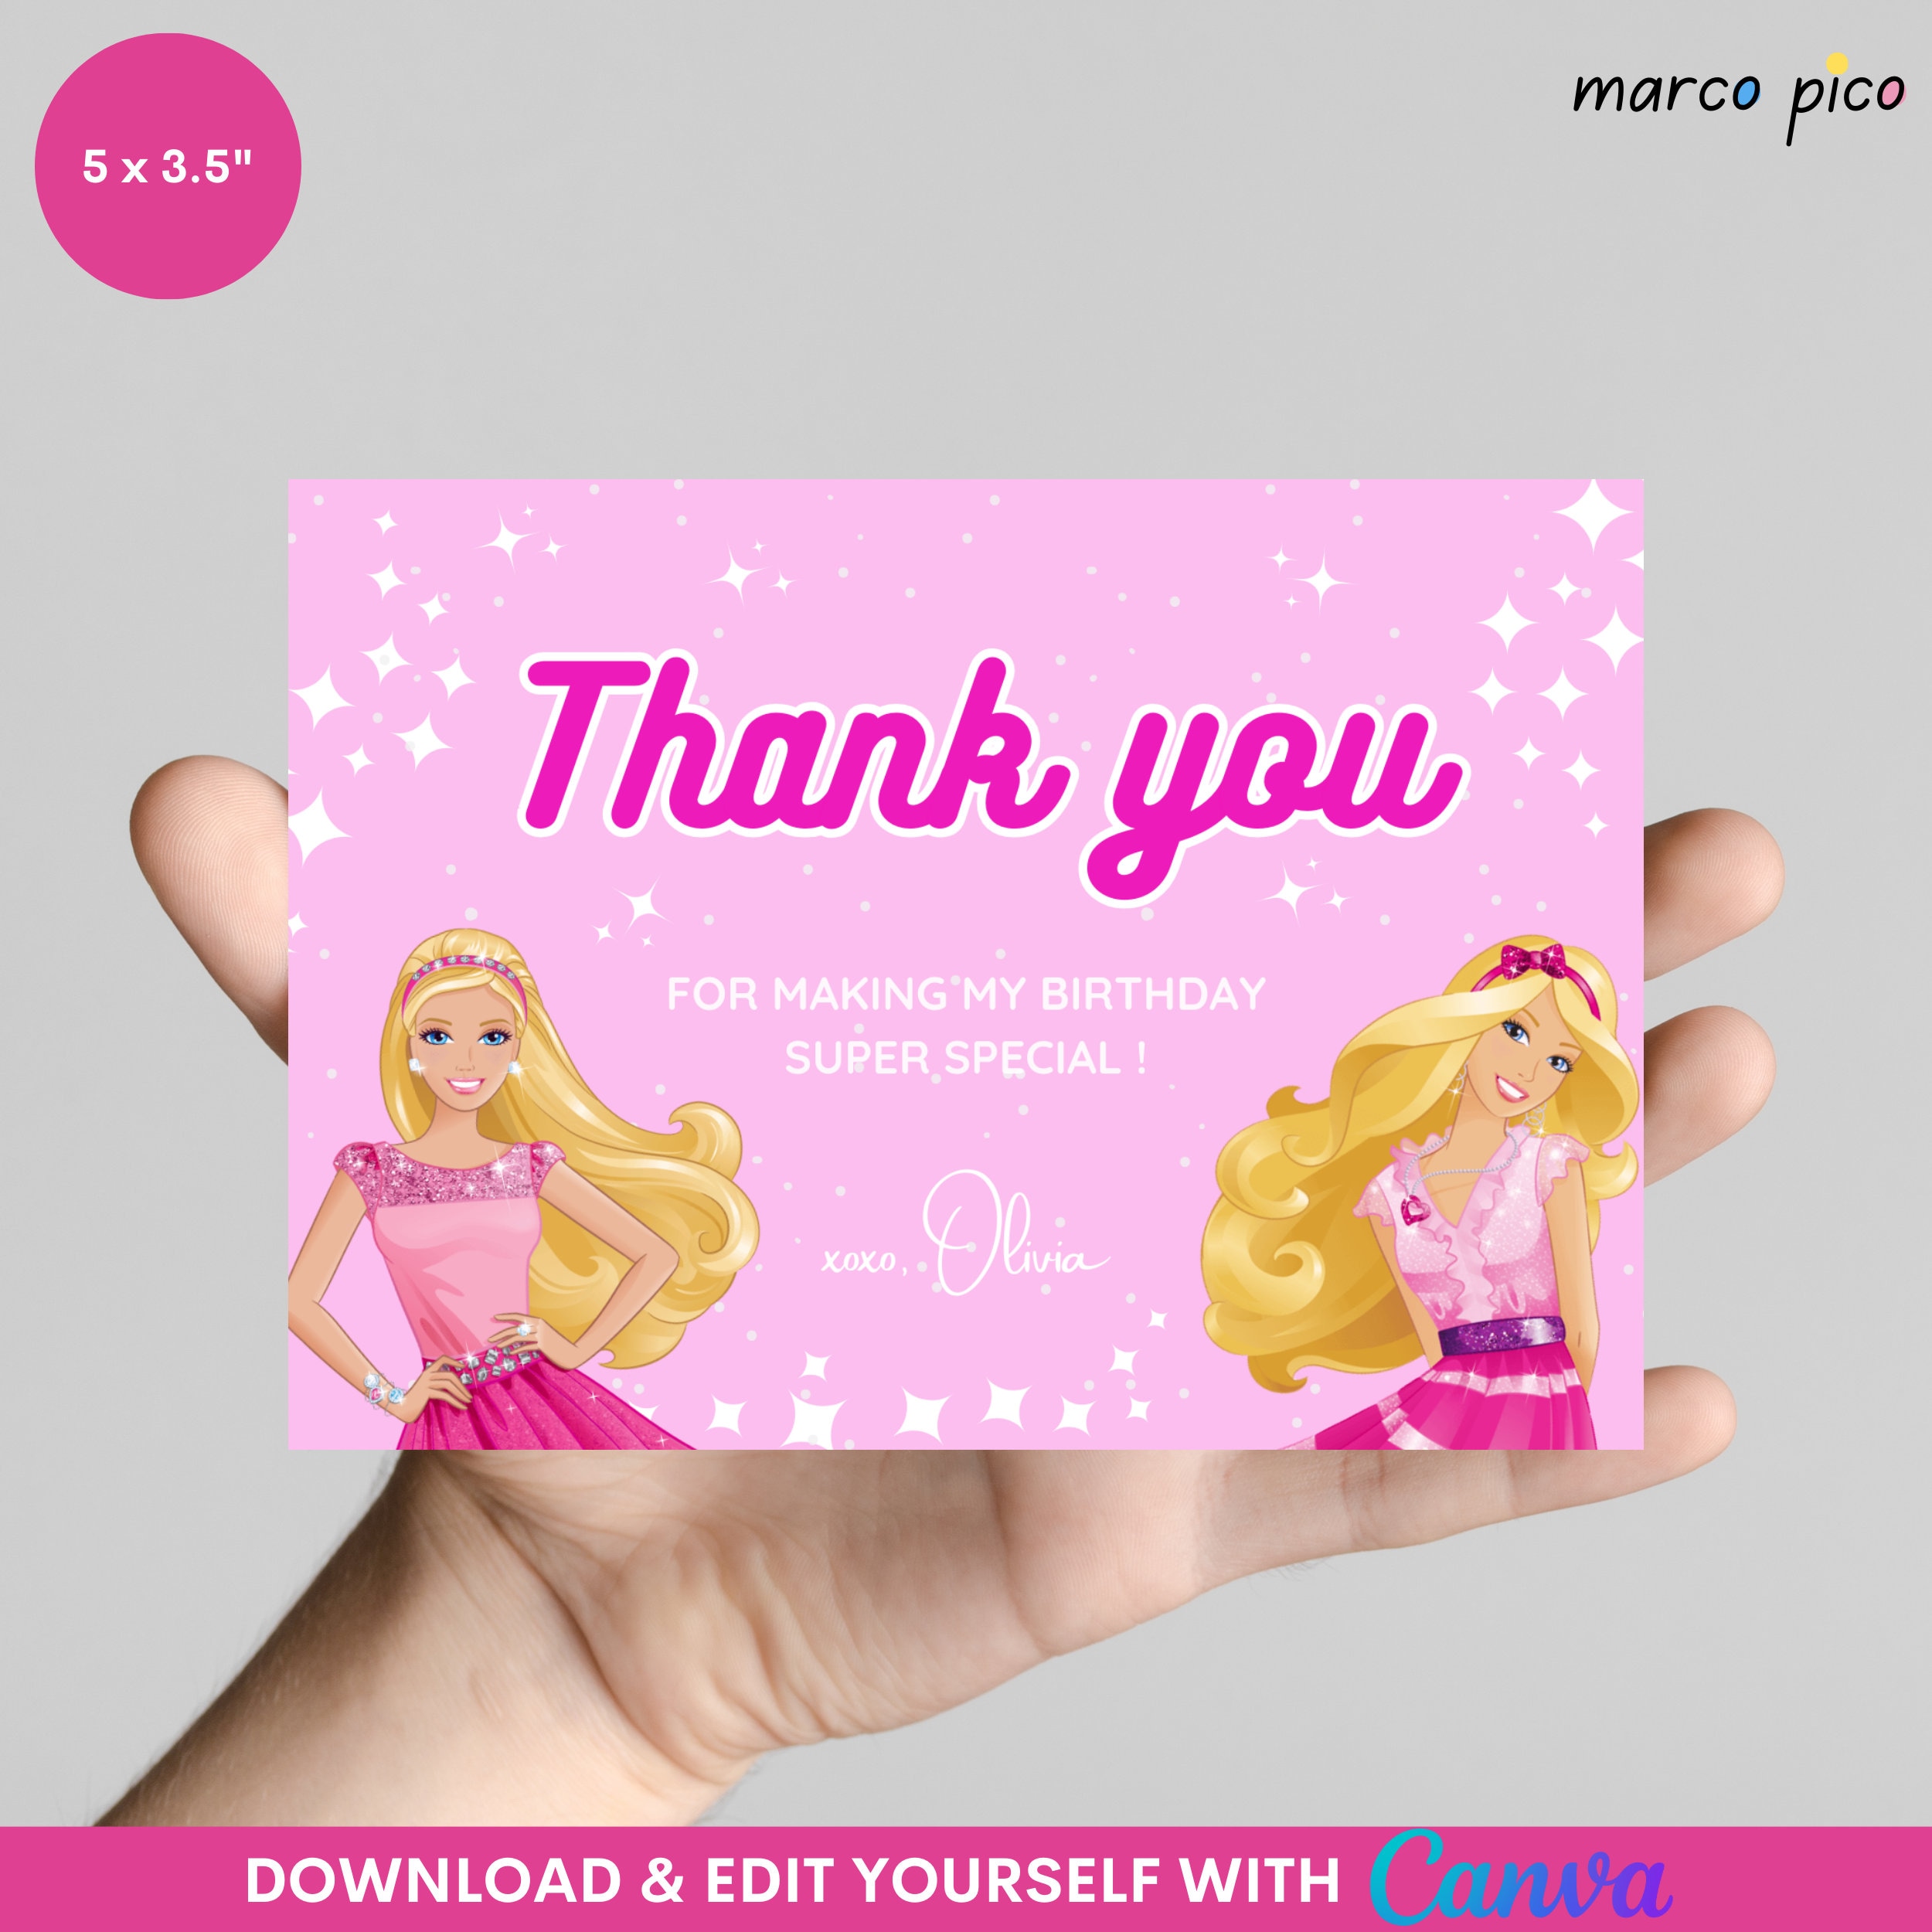 Adesivo Barbie 512909 Originale: Acquista Online in Offerta